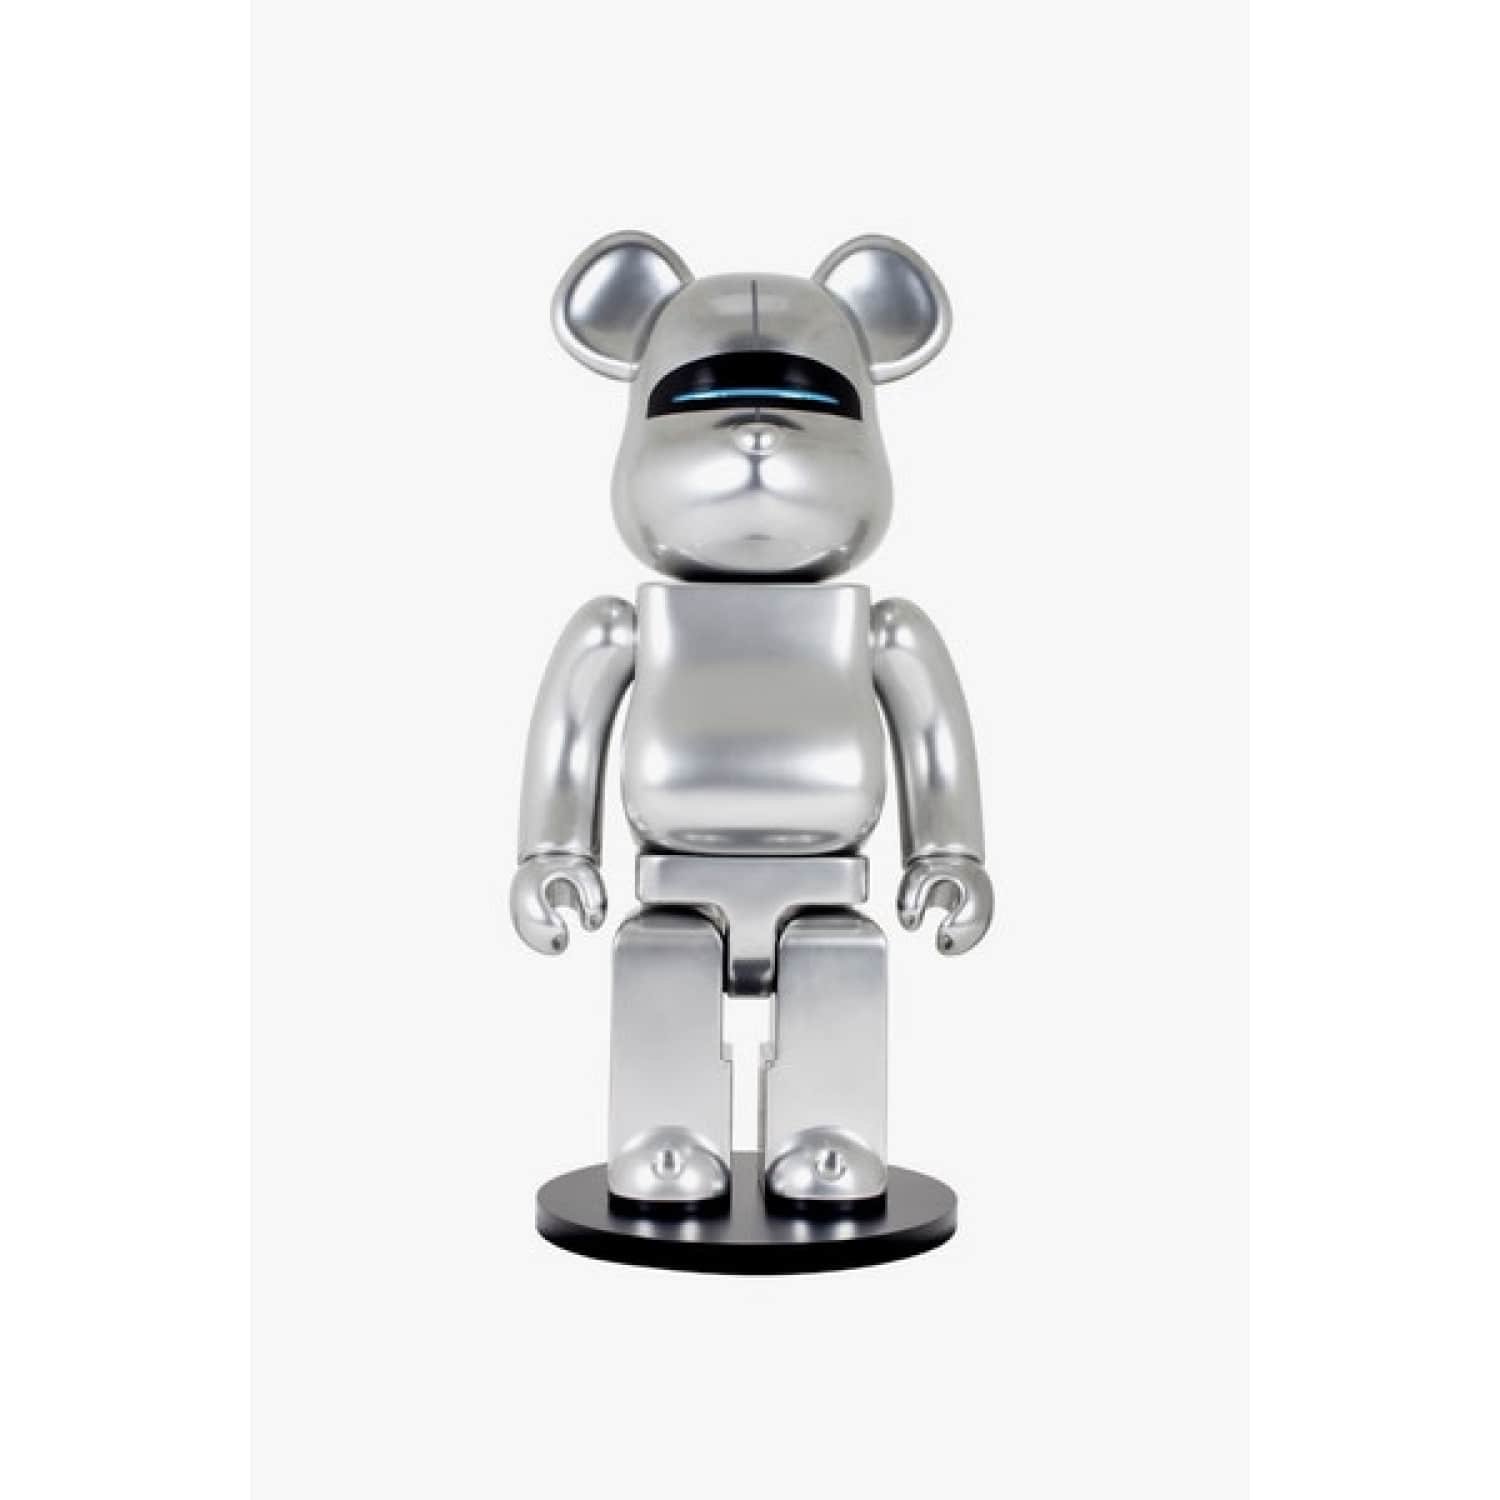 “Sorayama sexy robot” from Be@rbrick - Dope! Gallery